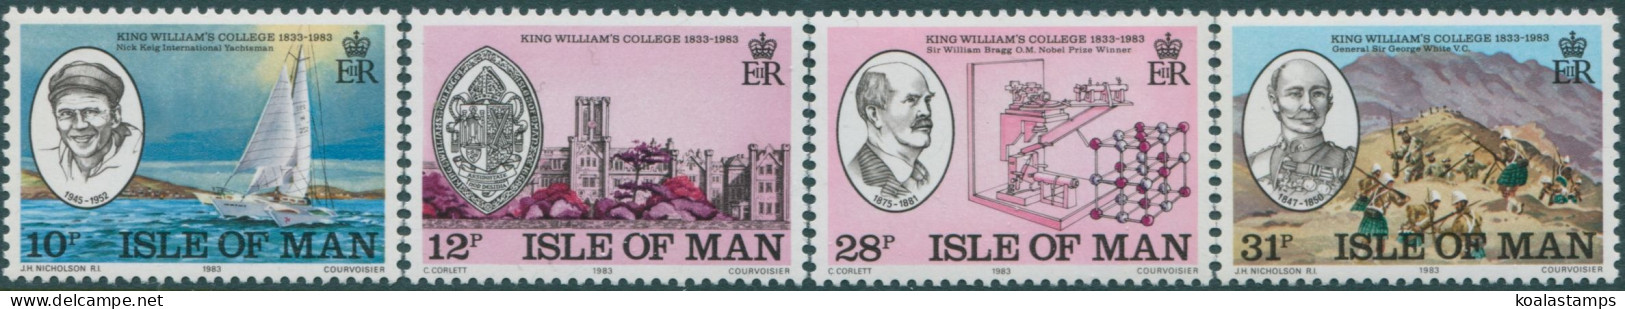 Isle Of Man 1983 SG251-254 King William College Set MNH - Man (Eiland)